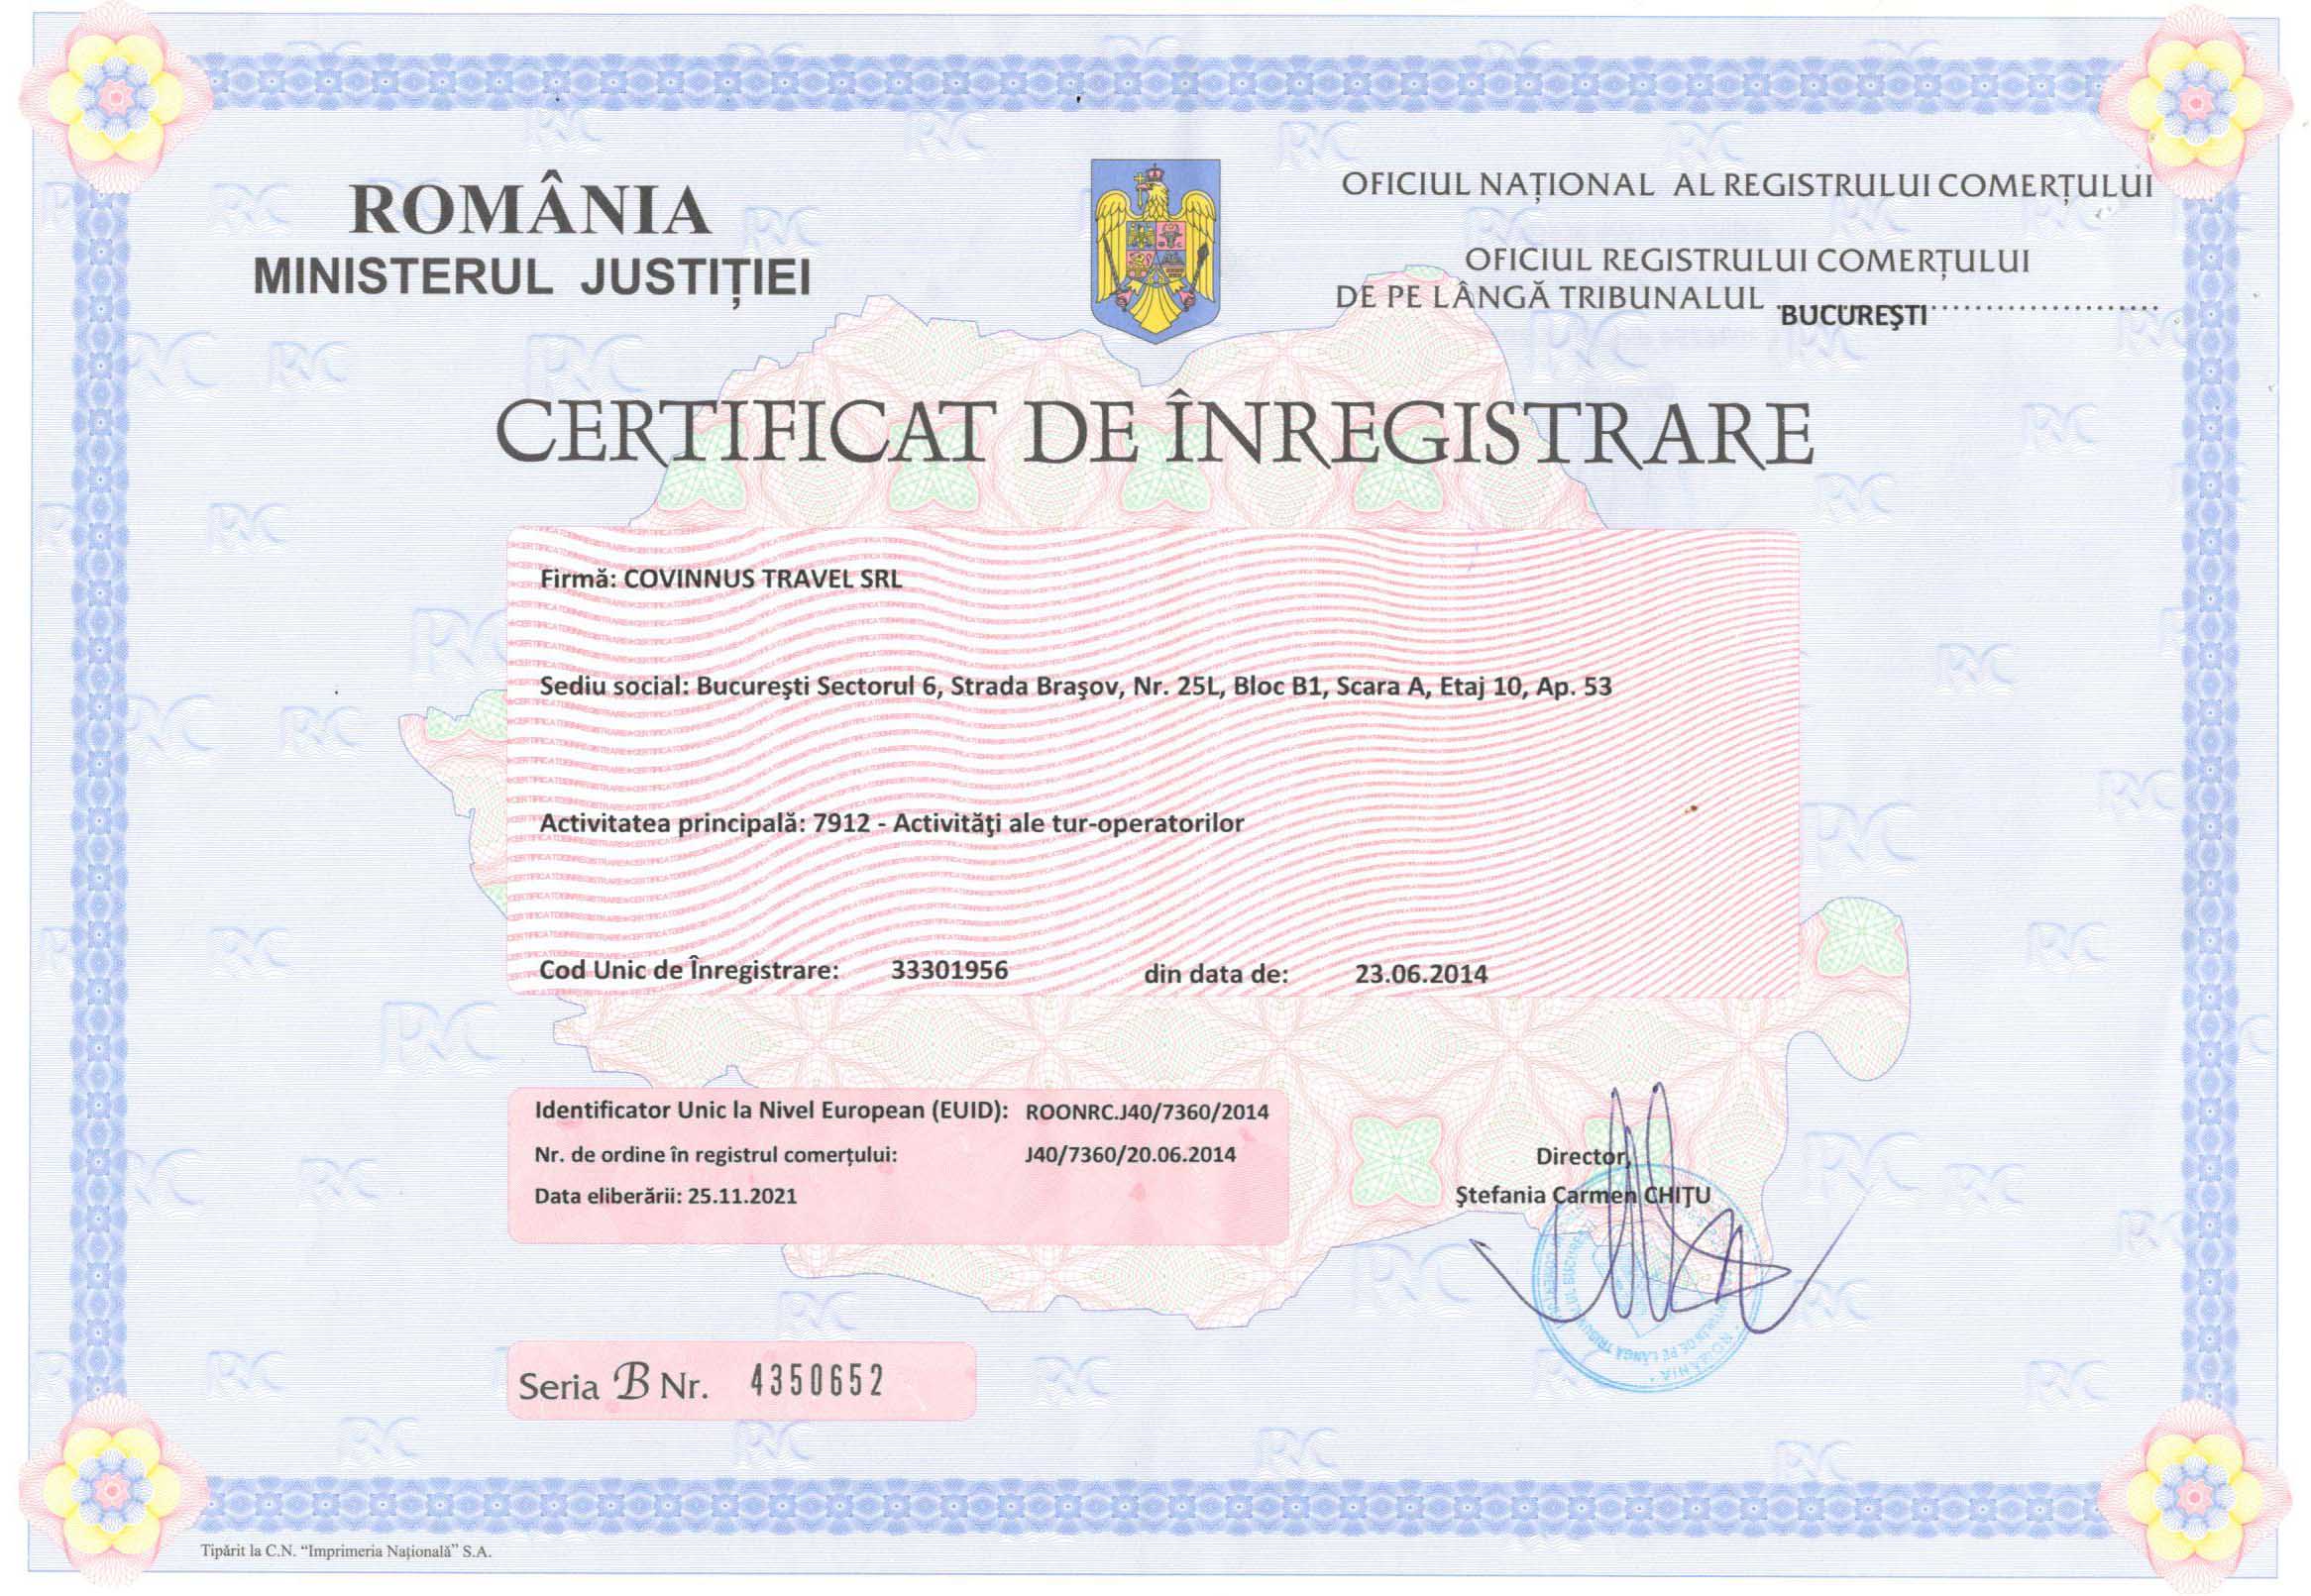 Covinnus Travel Registration Certificate